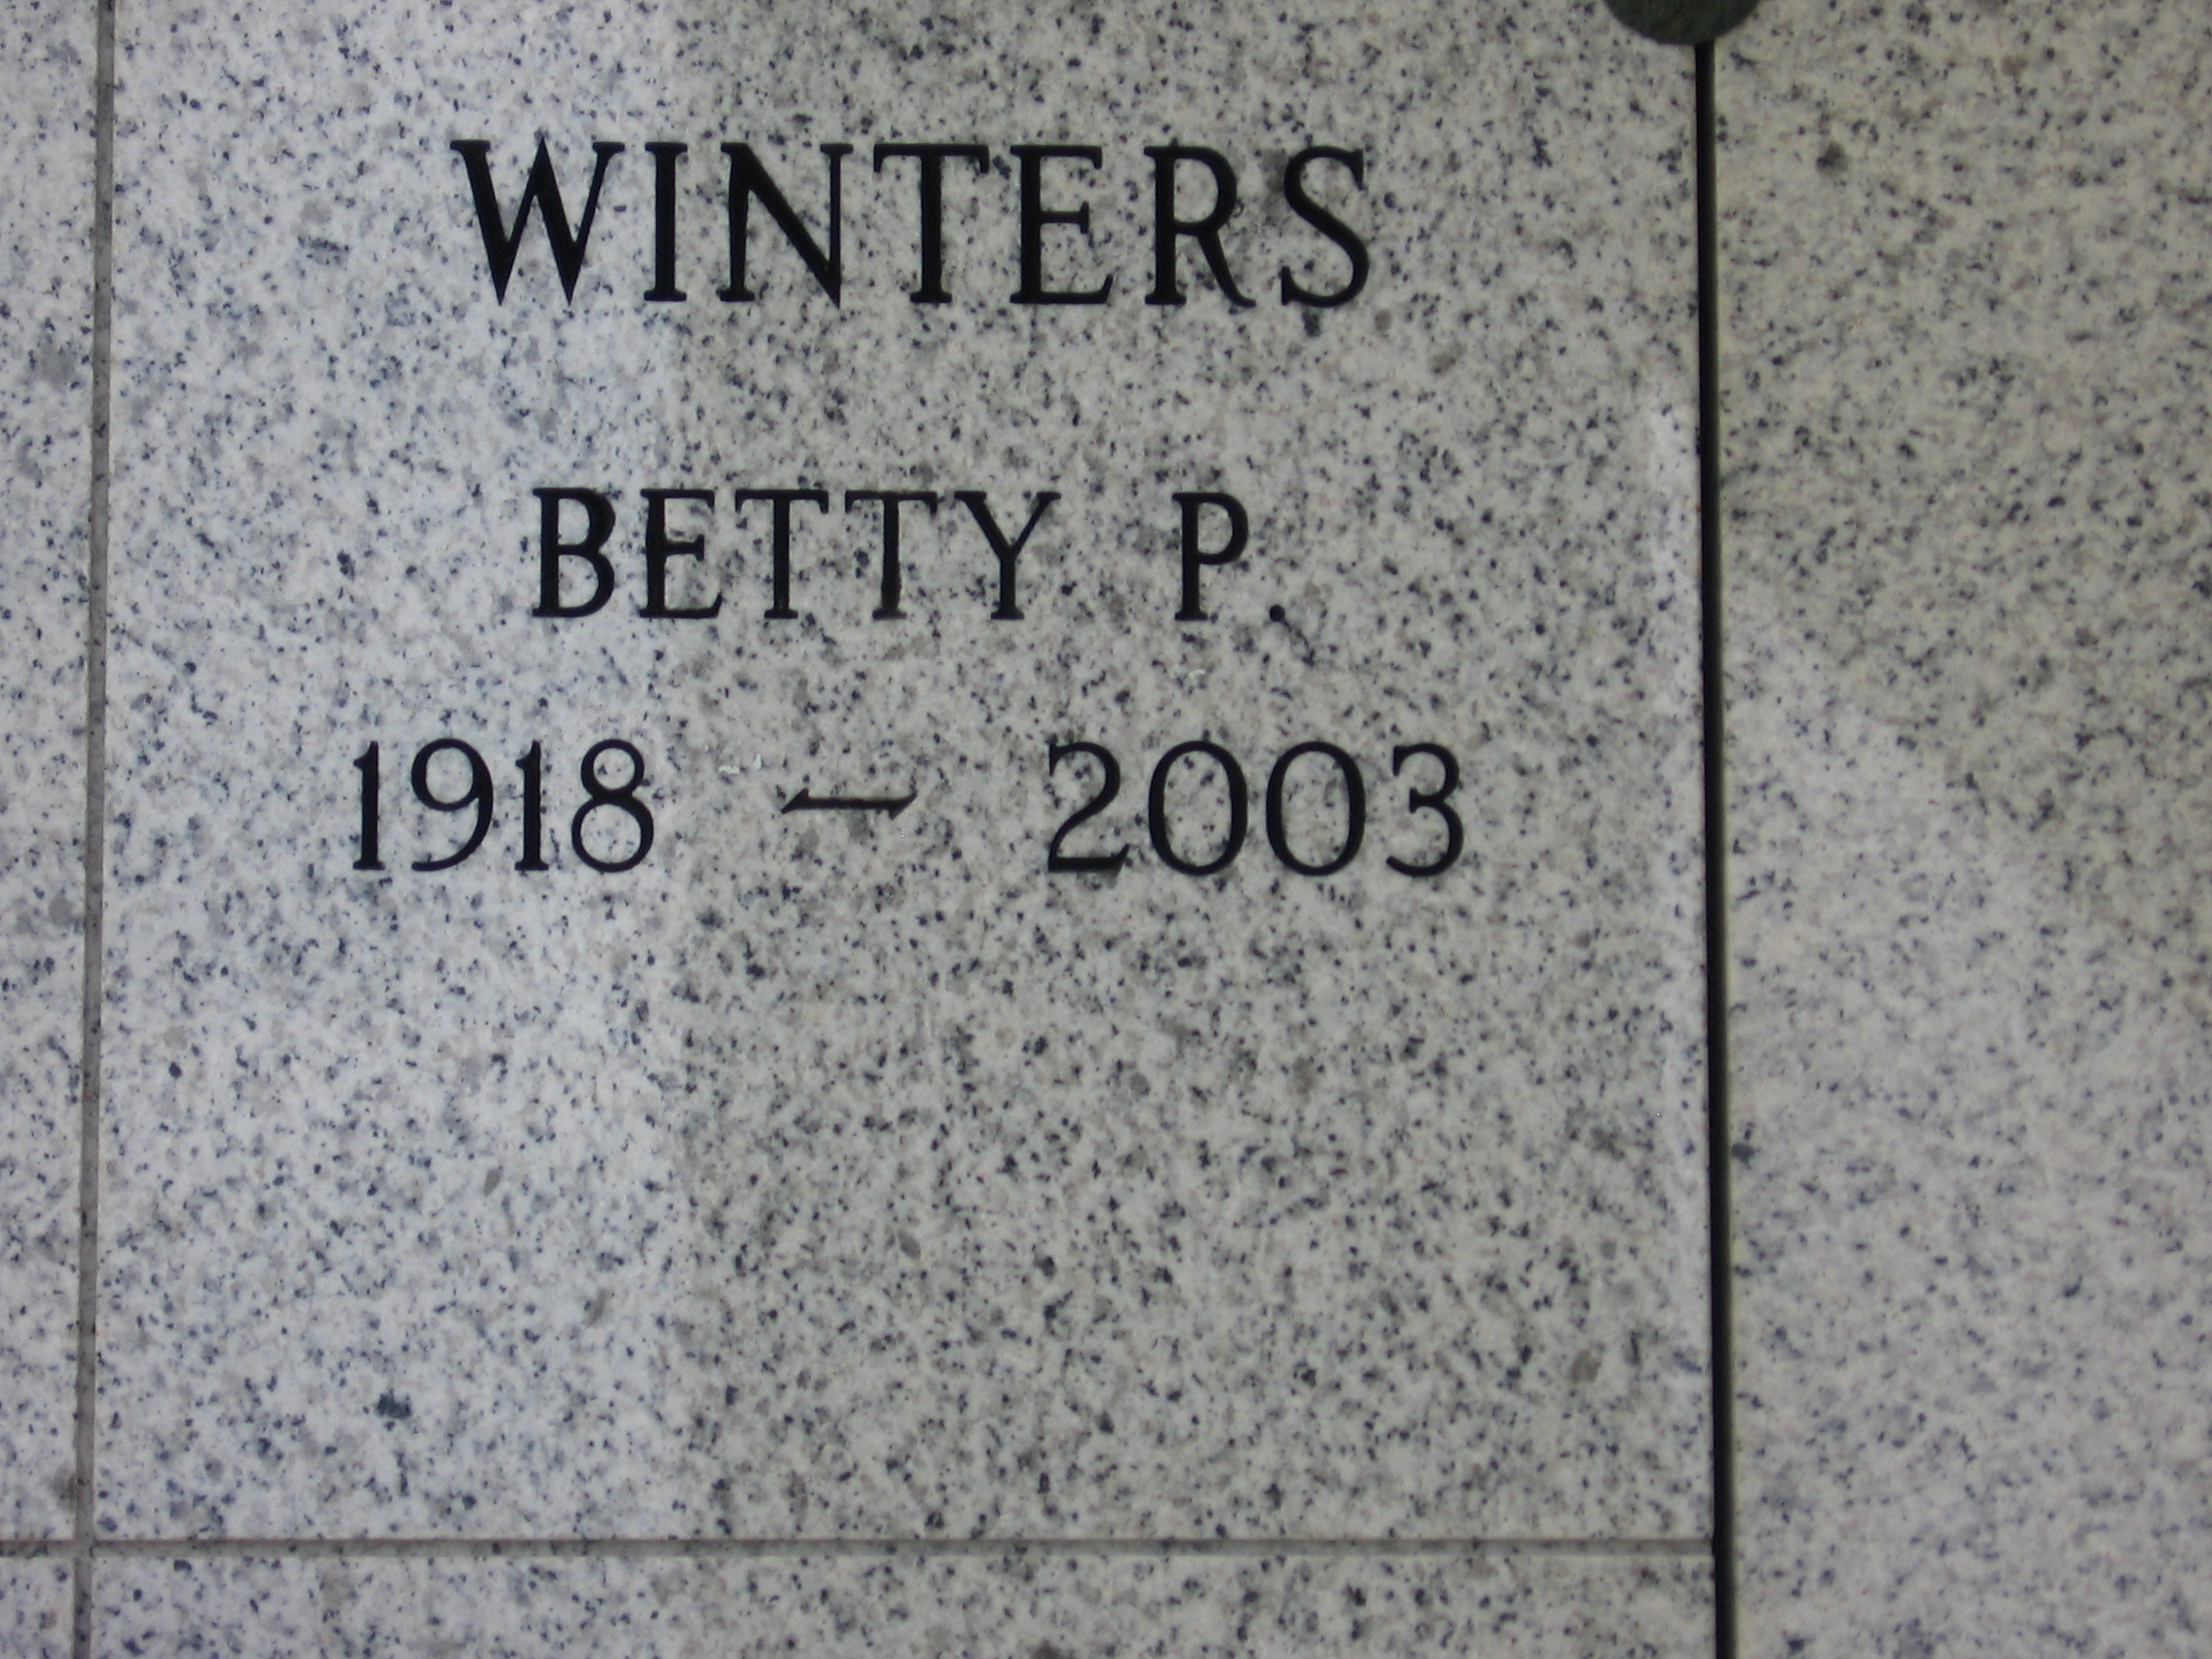 Betty P Winters